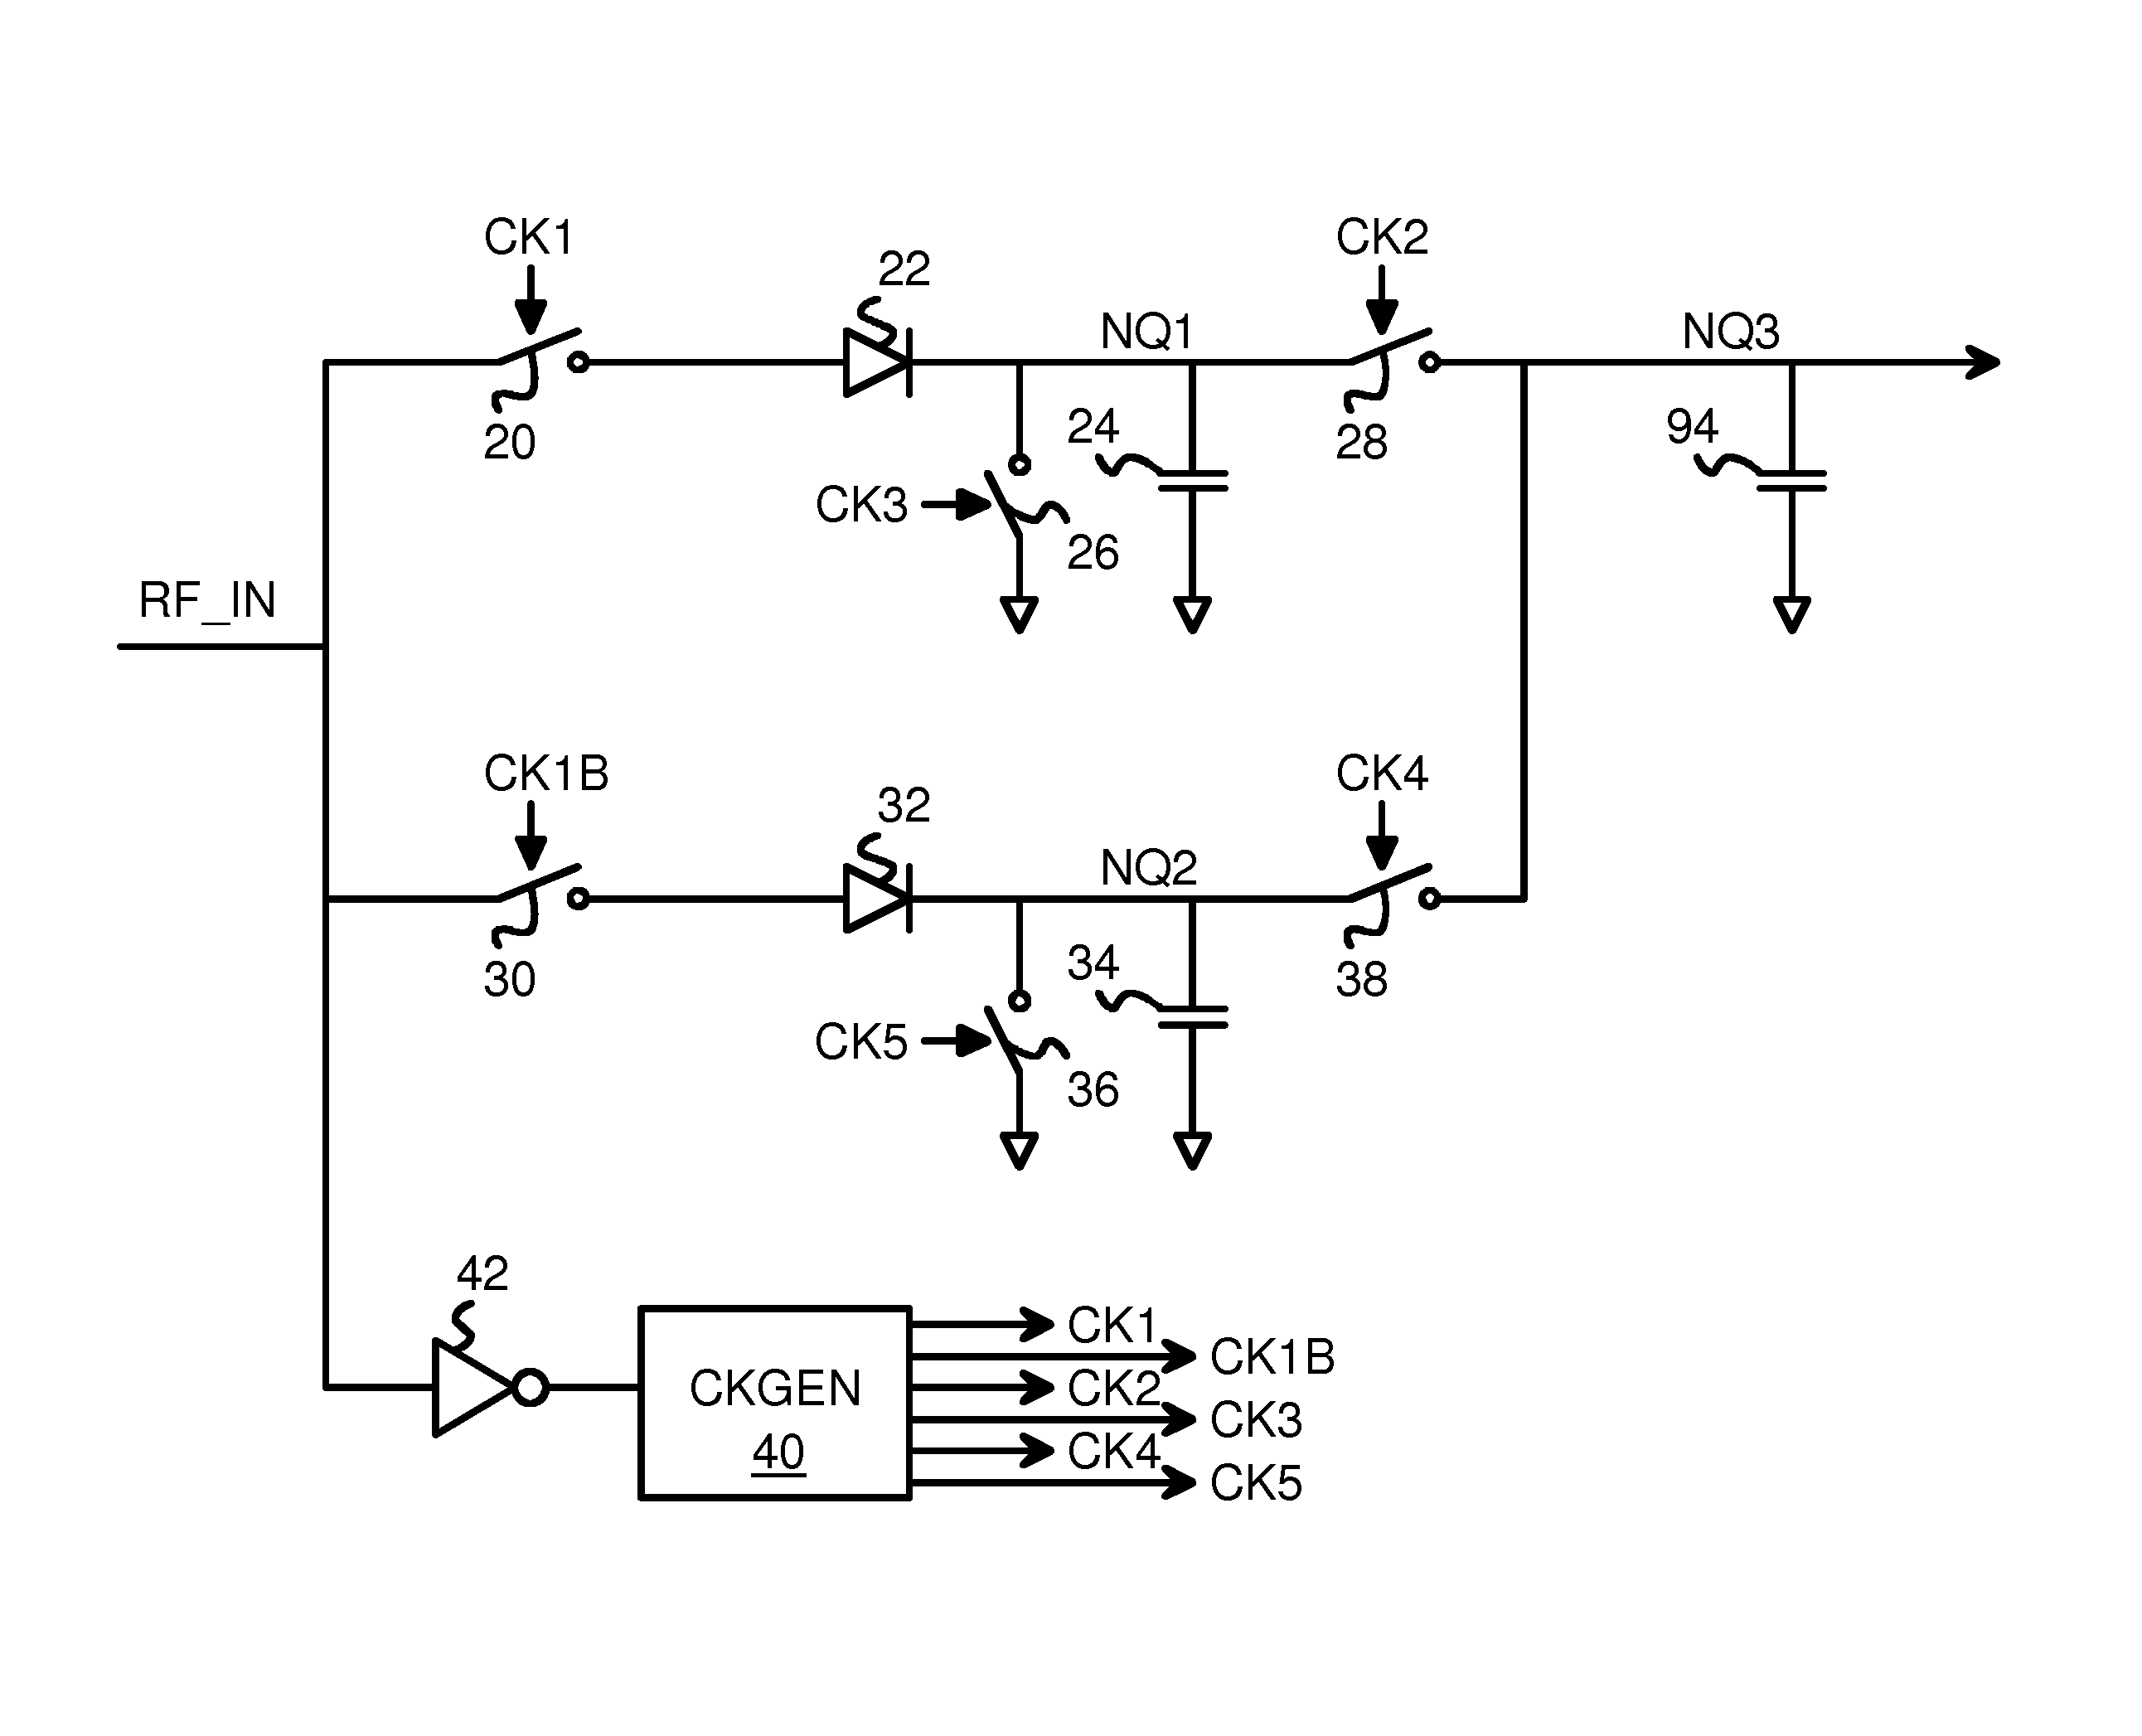 Amplitude-shift-keying (ASK) envelope detector and demodulation circuits